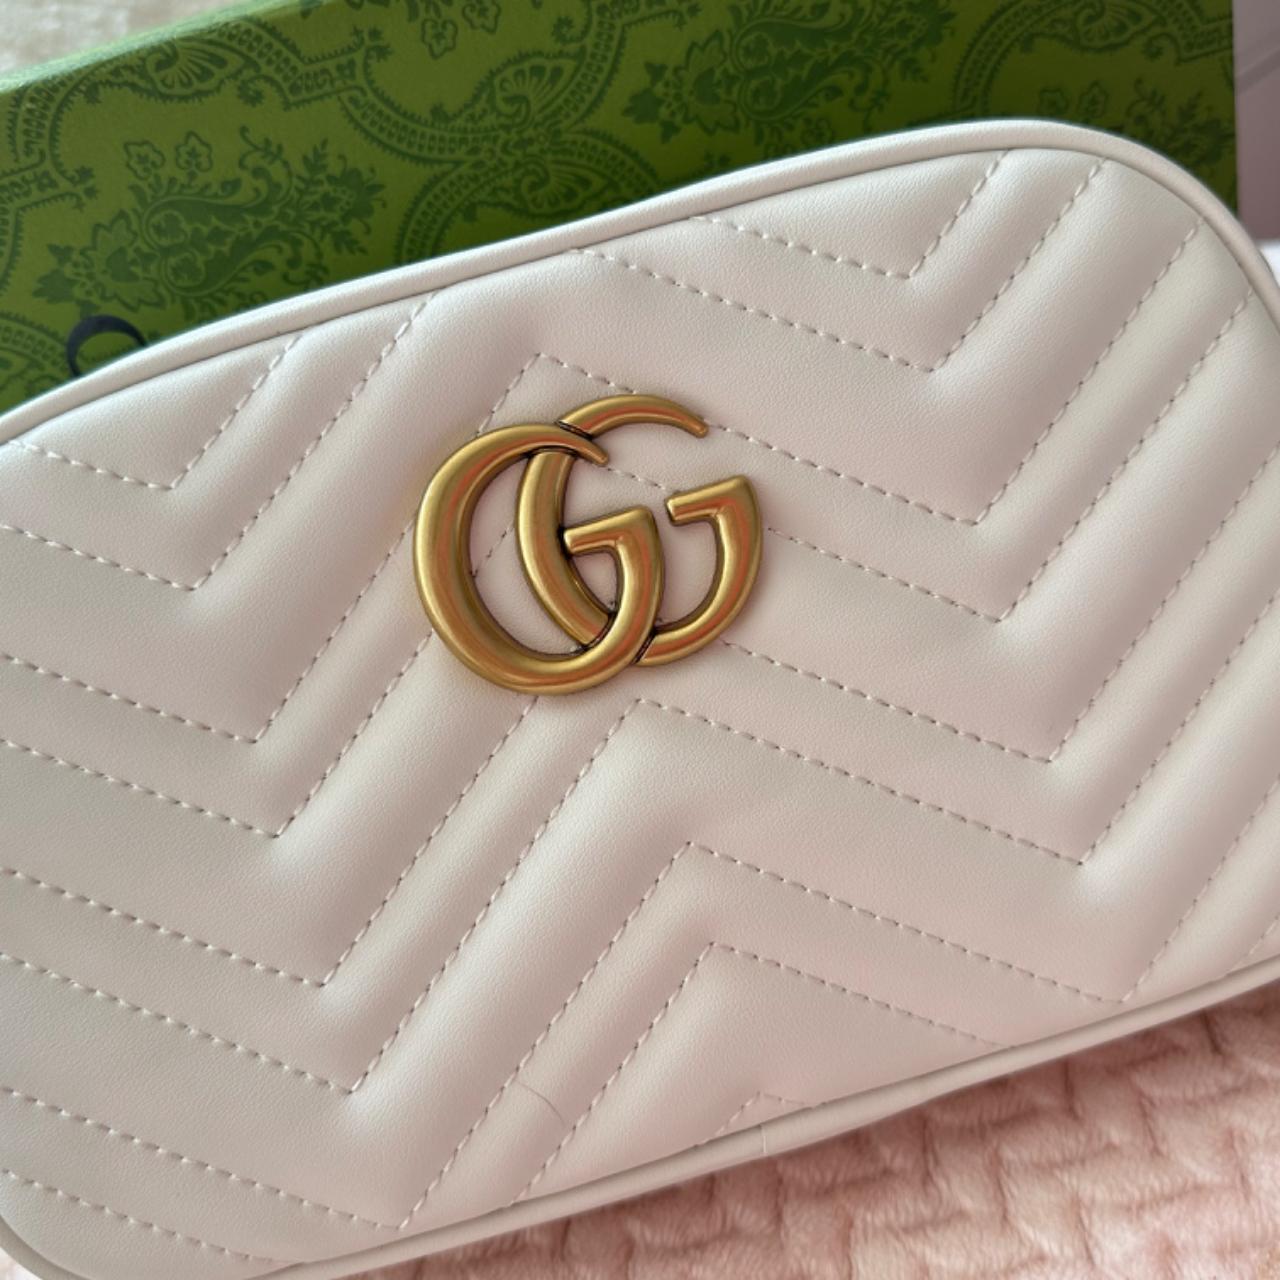 Gucci Boston Leather Handbag AND matching wallet - Depop